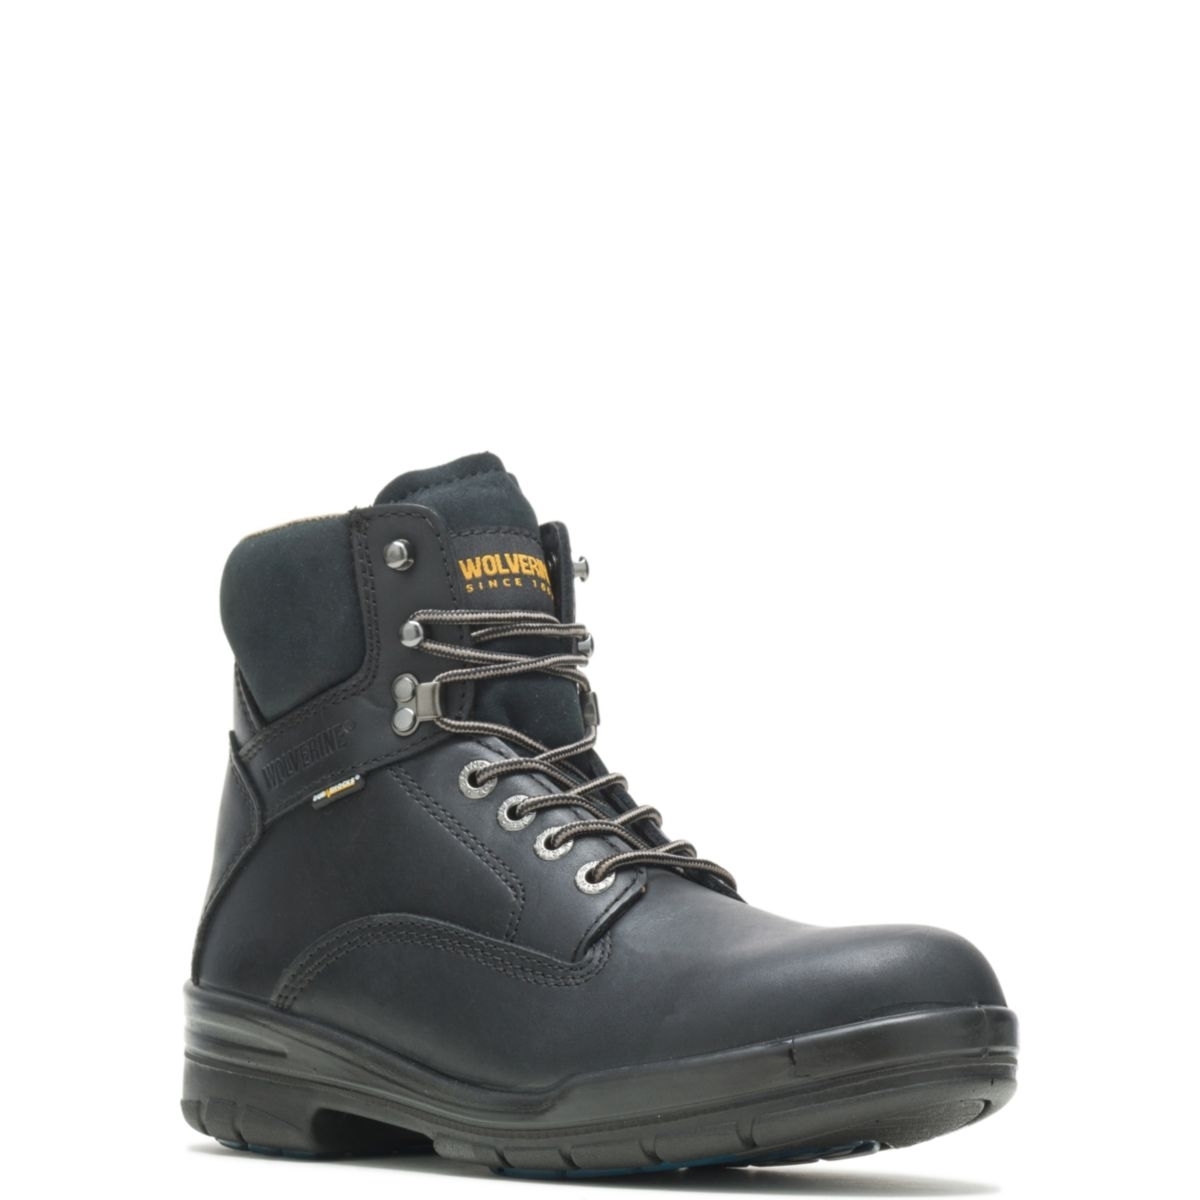 WOLVERINE Men's 6 DuraShocksÂ® Slip Resistant Direct-Attached Lined Soft Toe Work Boot Black - W03123 14 WIDE BLACK - BLACK, 11 WIDE